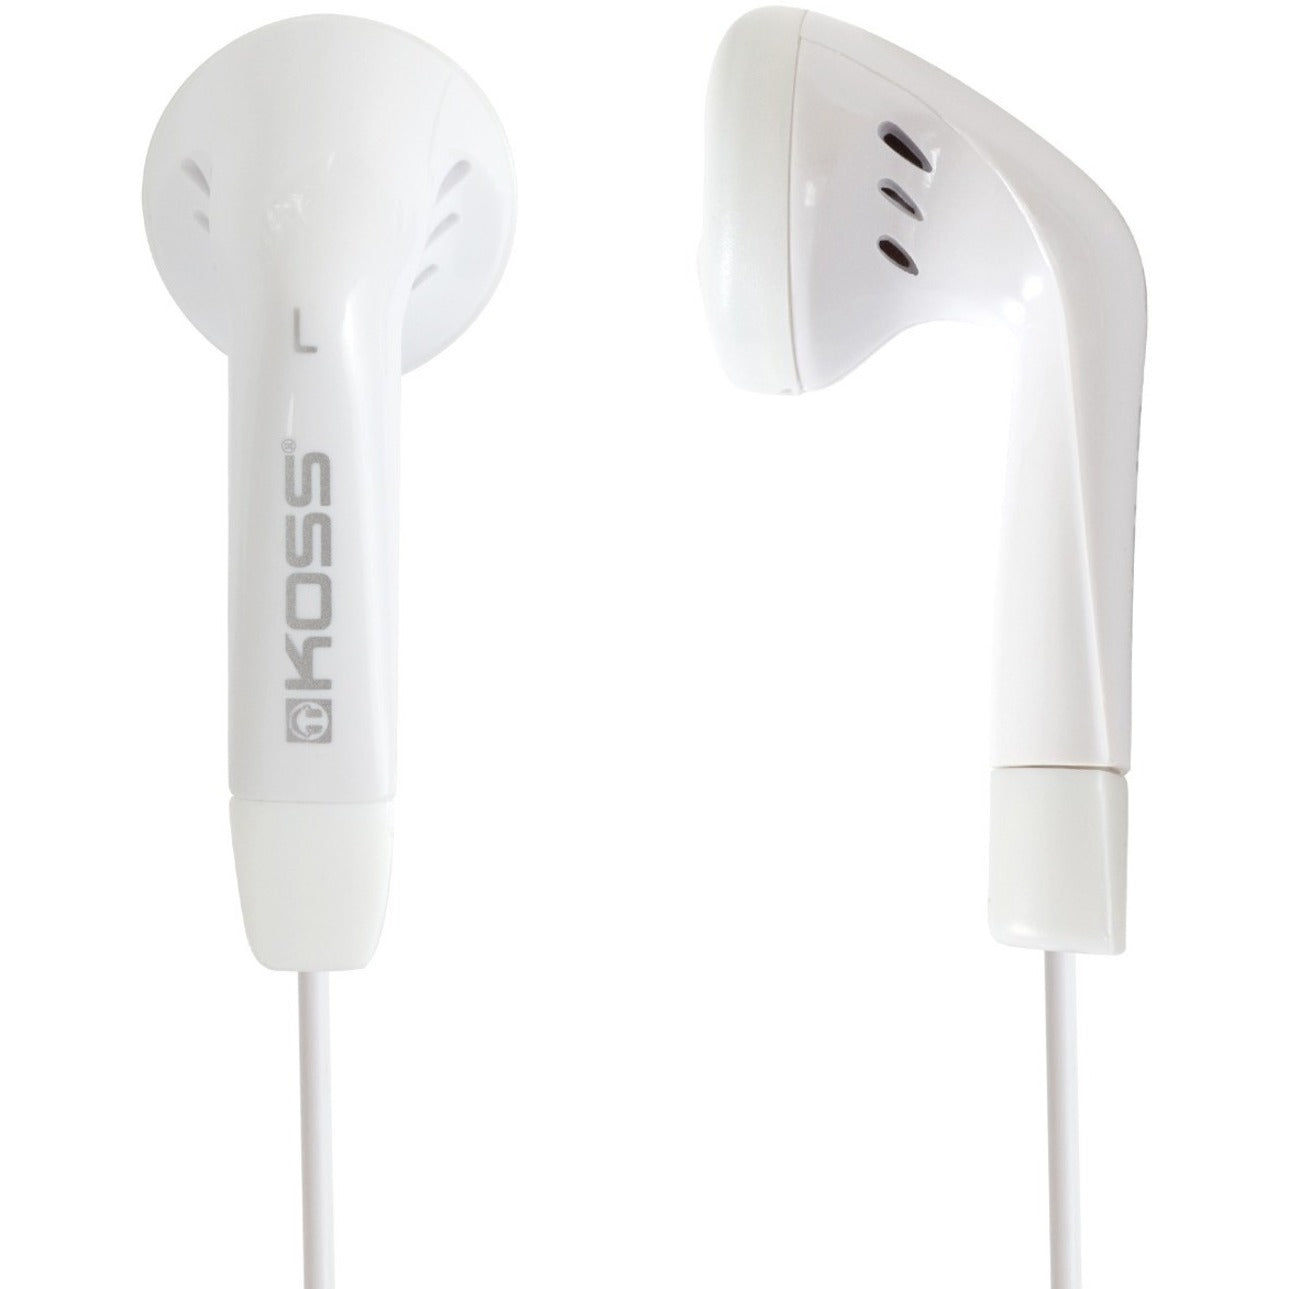 Koss KE5W Lightweight Earbuds, Comfortable, Durable, Stereo Sound